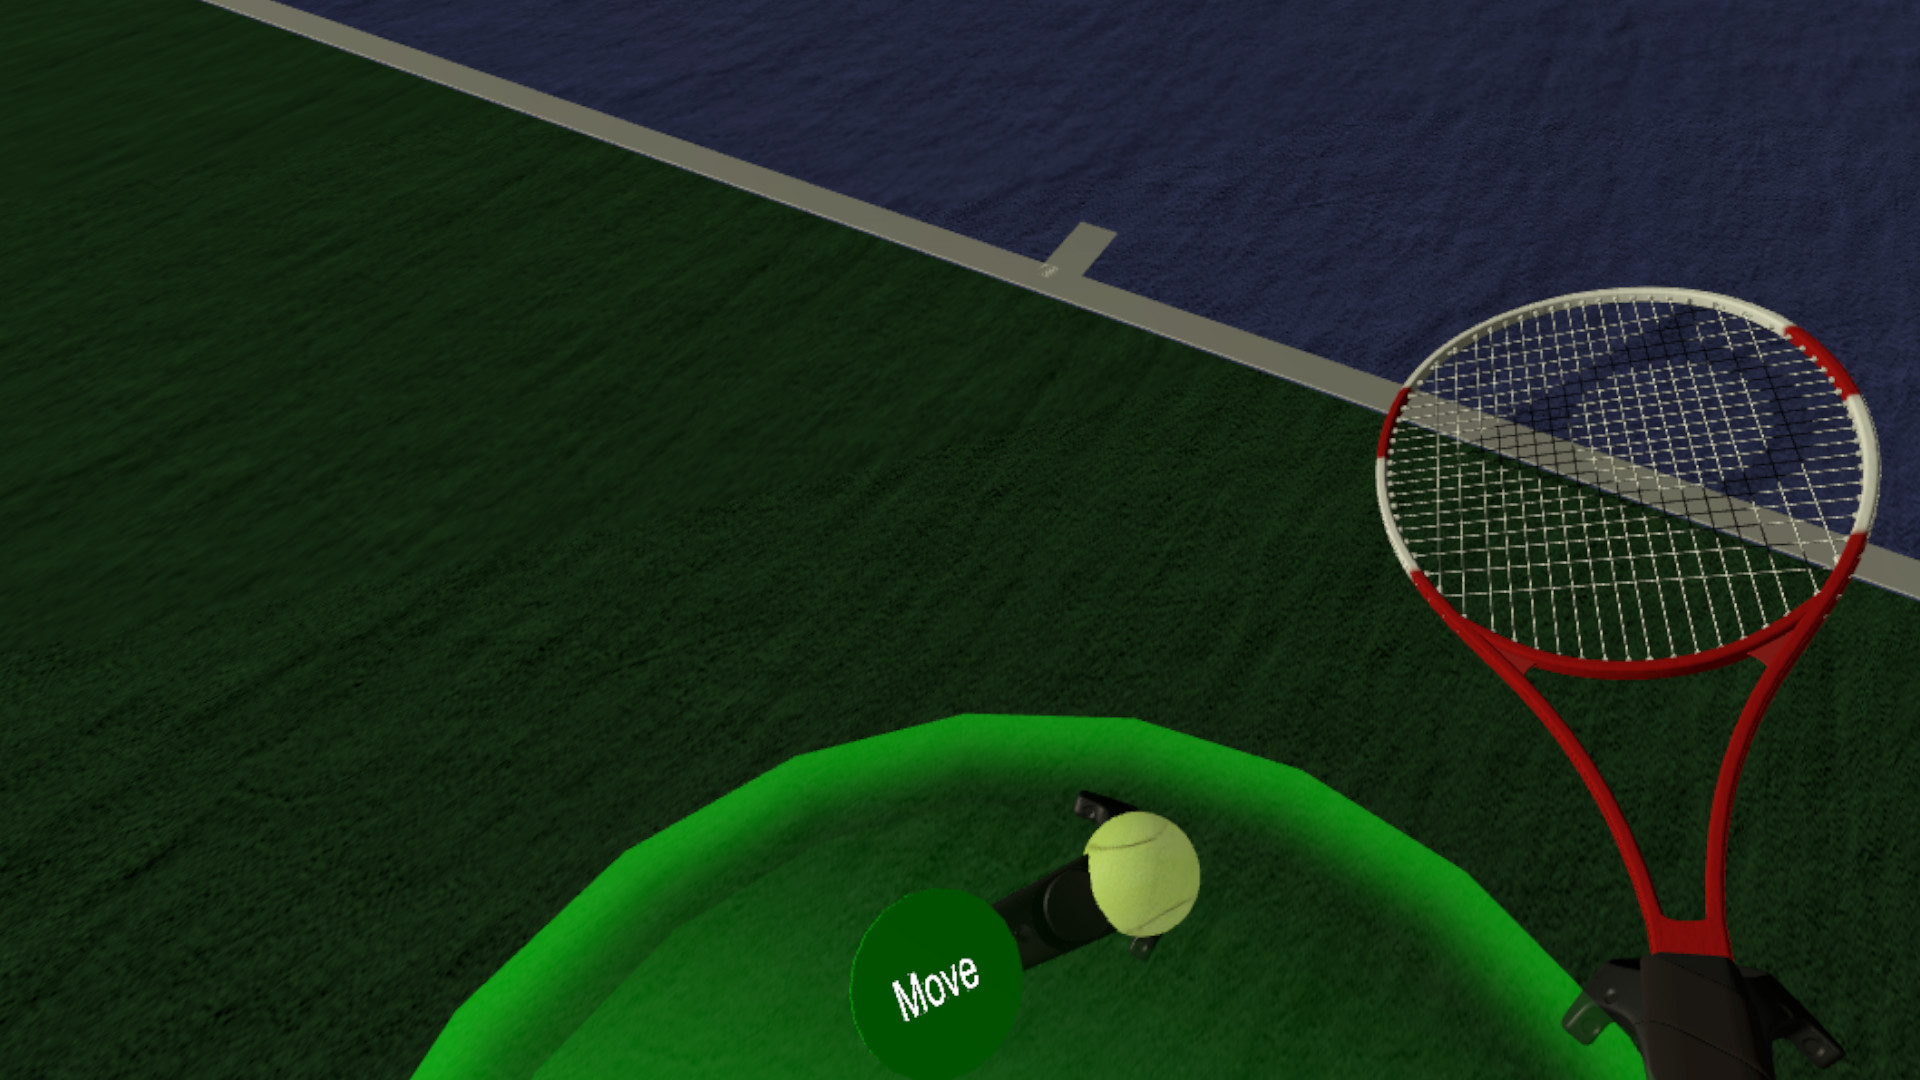 Игра теннис c. Tennis Esports игра. Игра теннис магический мяч. Геометрия игры в теннисе. Теннис игра против робота.